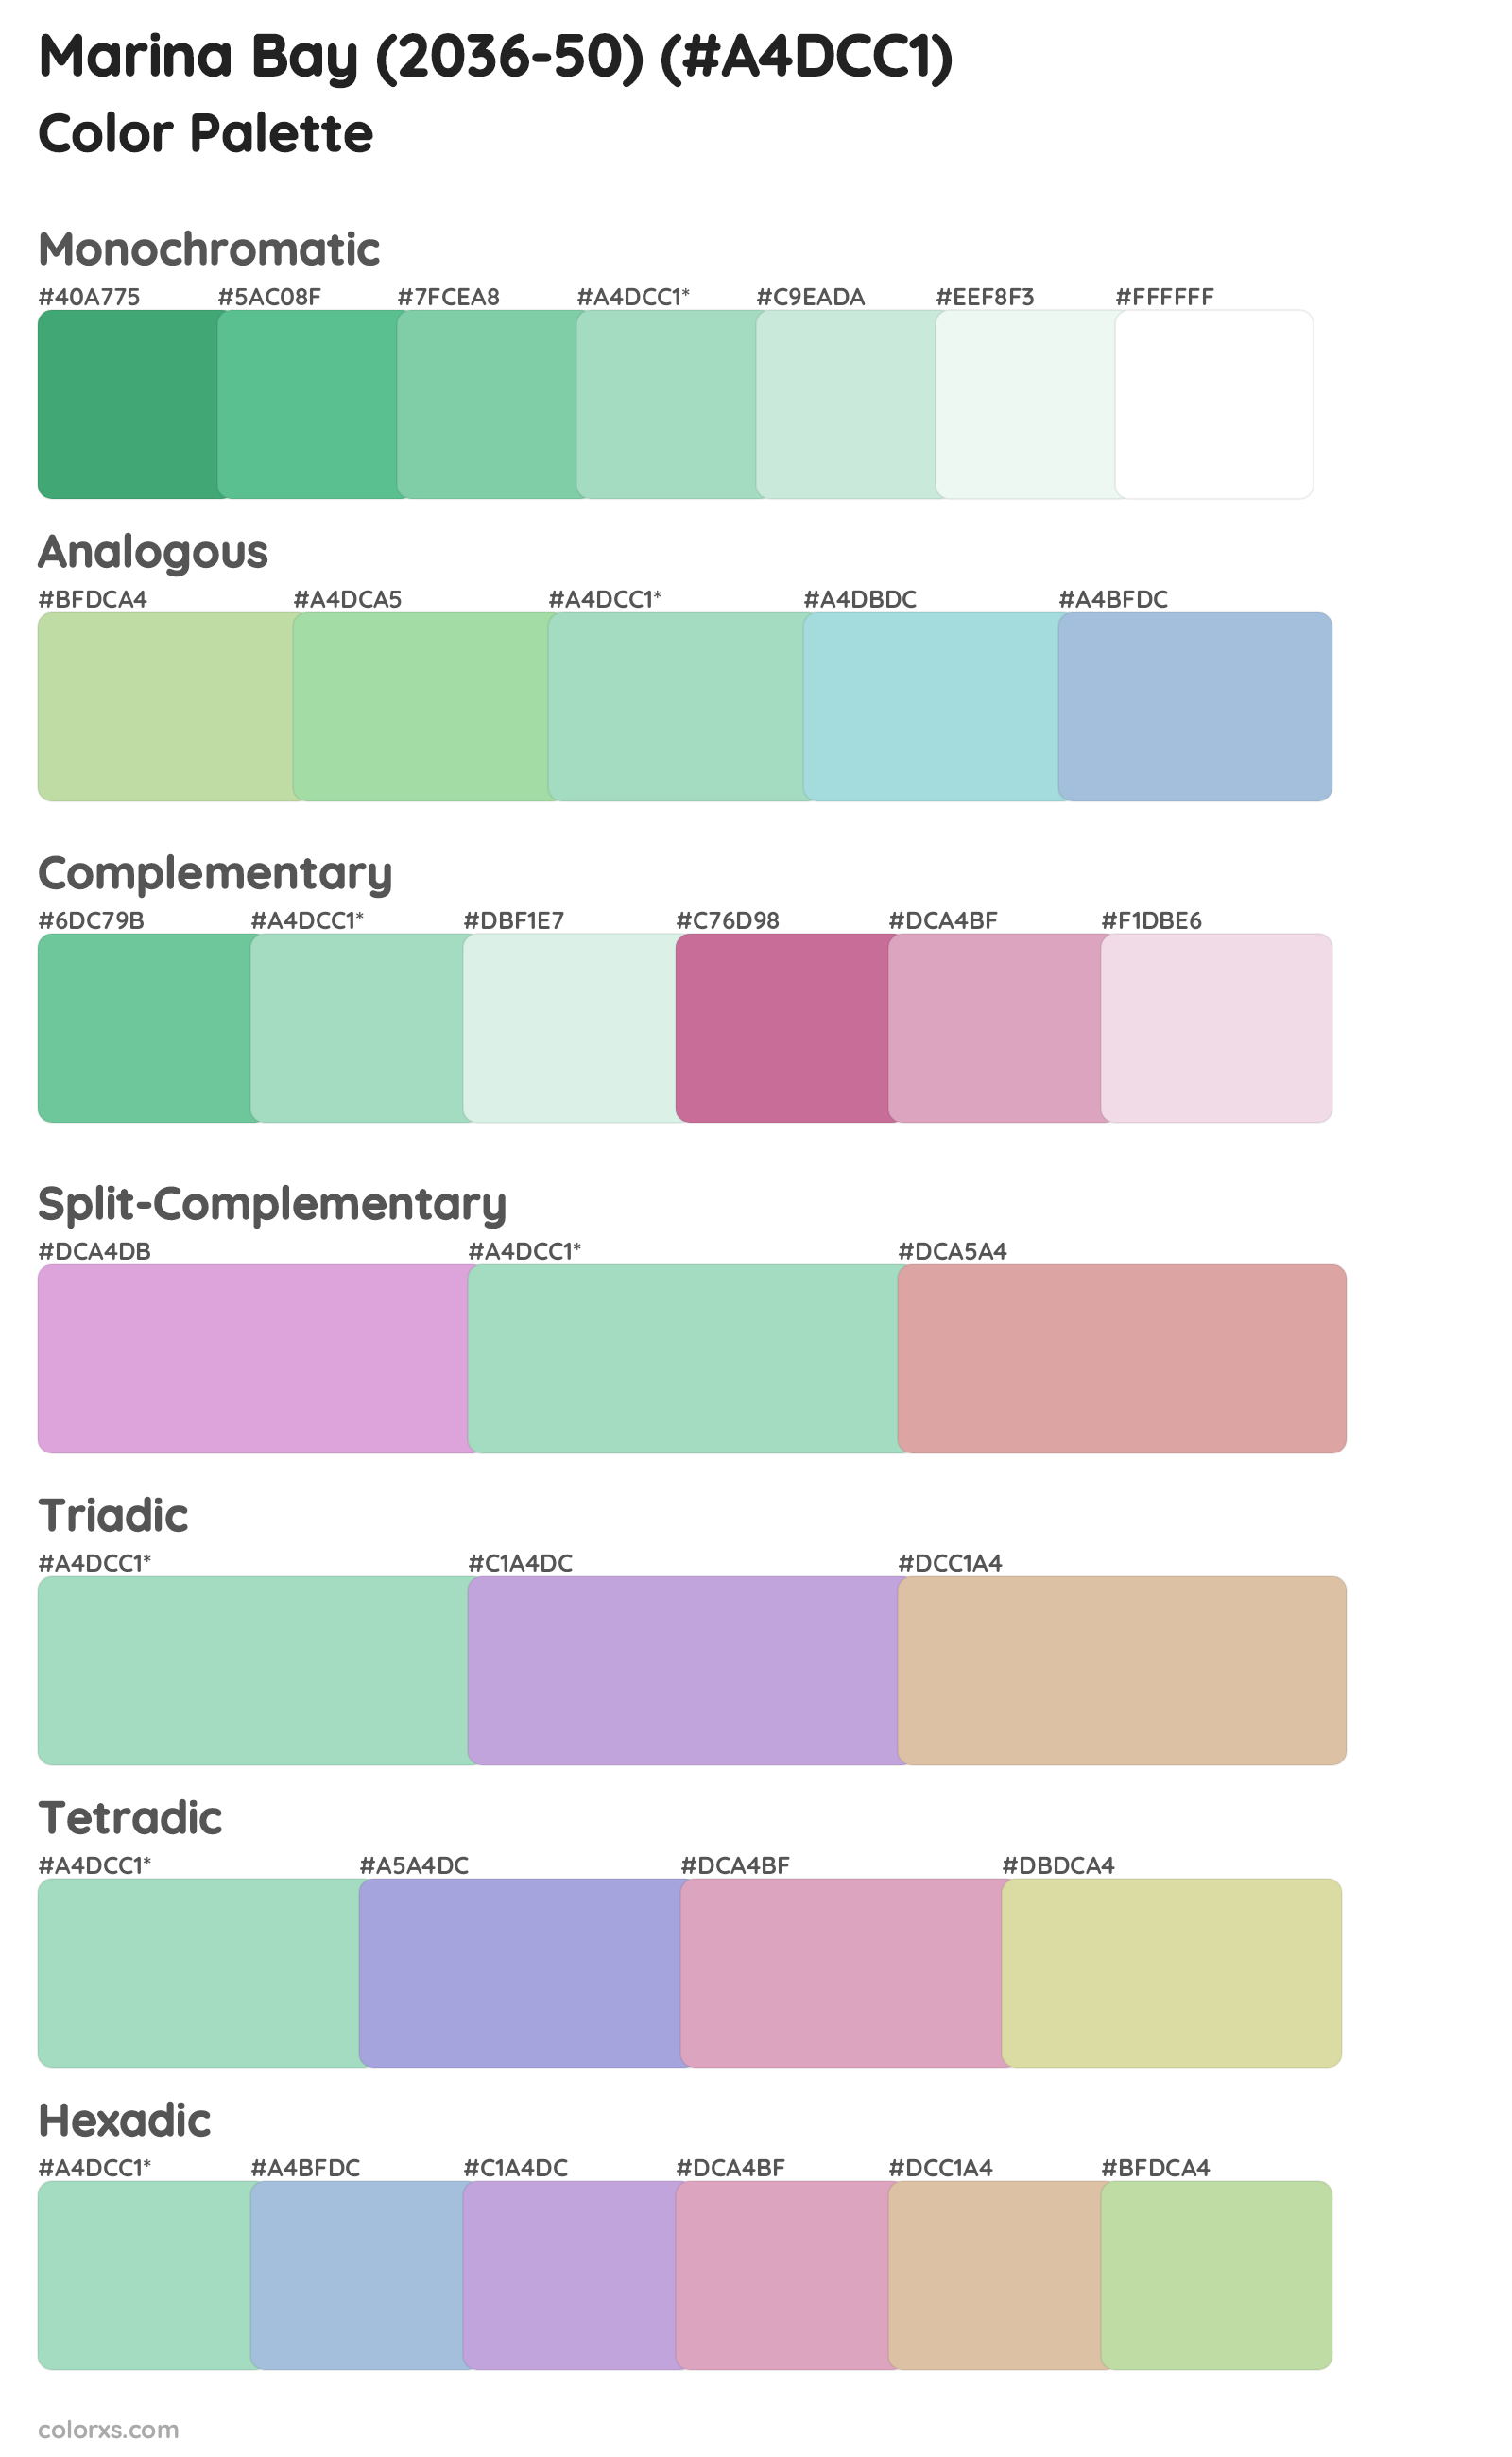 Marina Bay (2036-50) Color Scheme Palettes